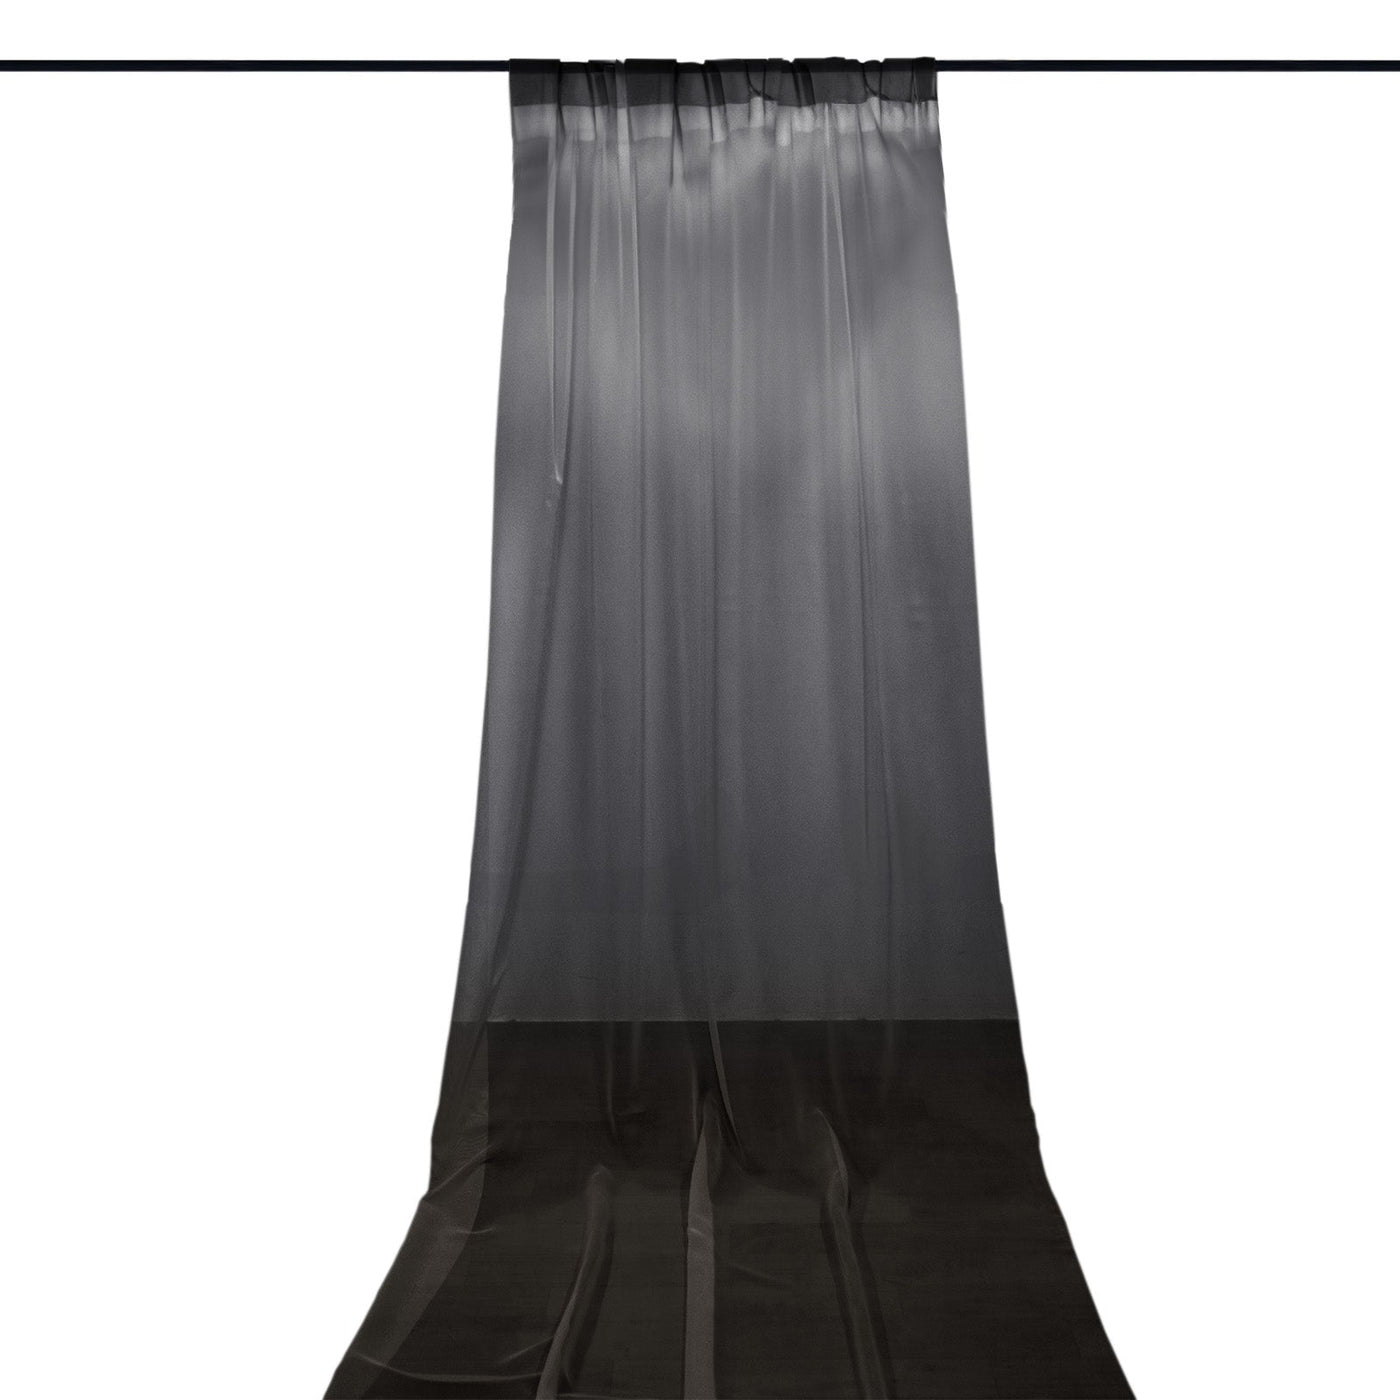 Premium Black Chiffon Curtain Panel with Rod Pocket